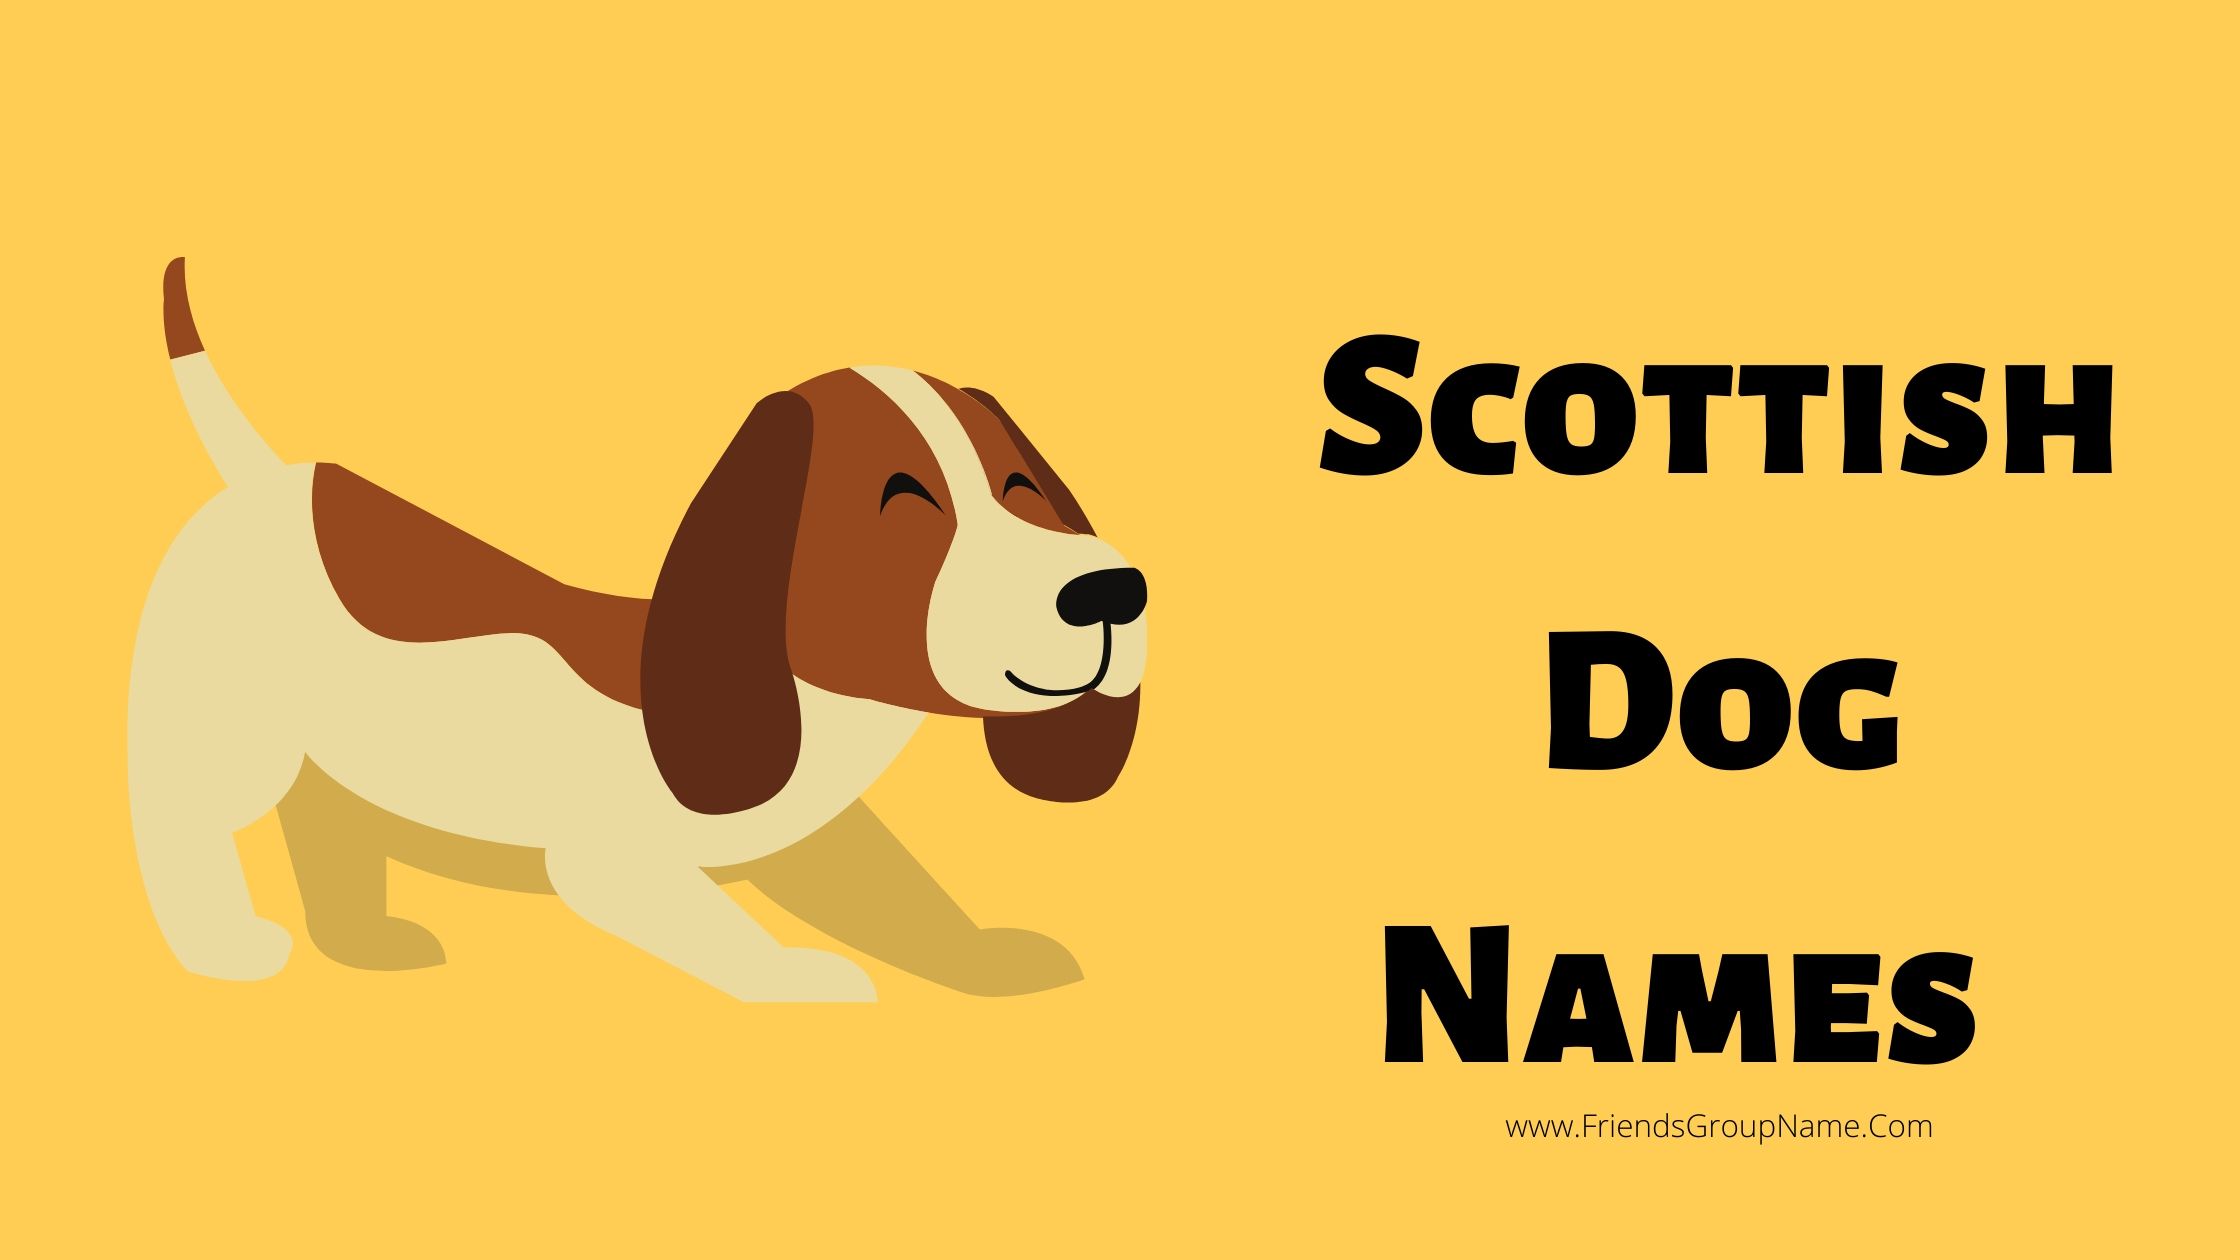 Scottish Dog Names, Dog Names